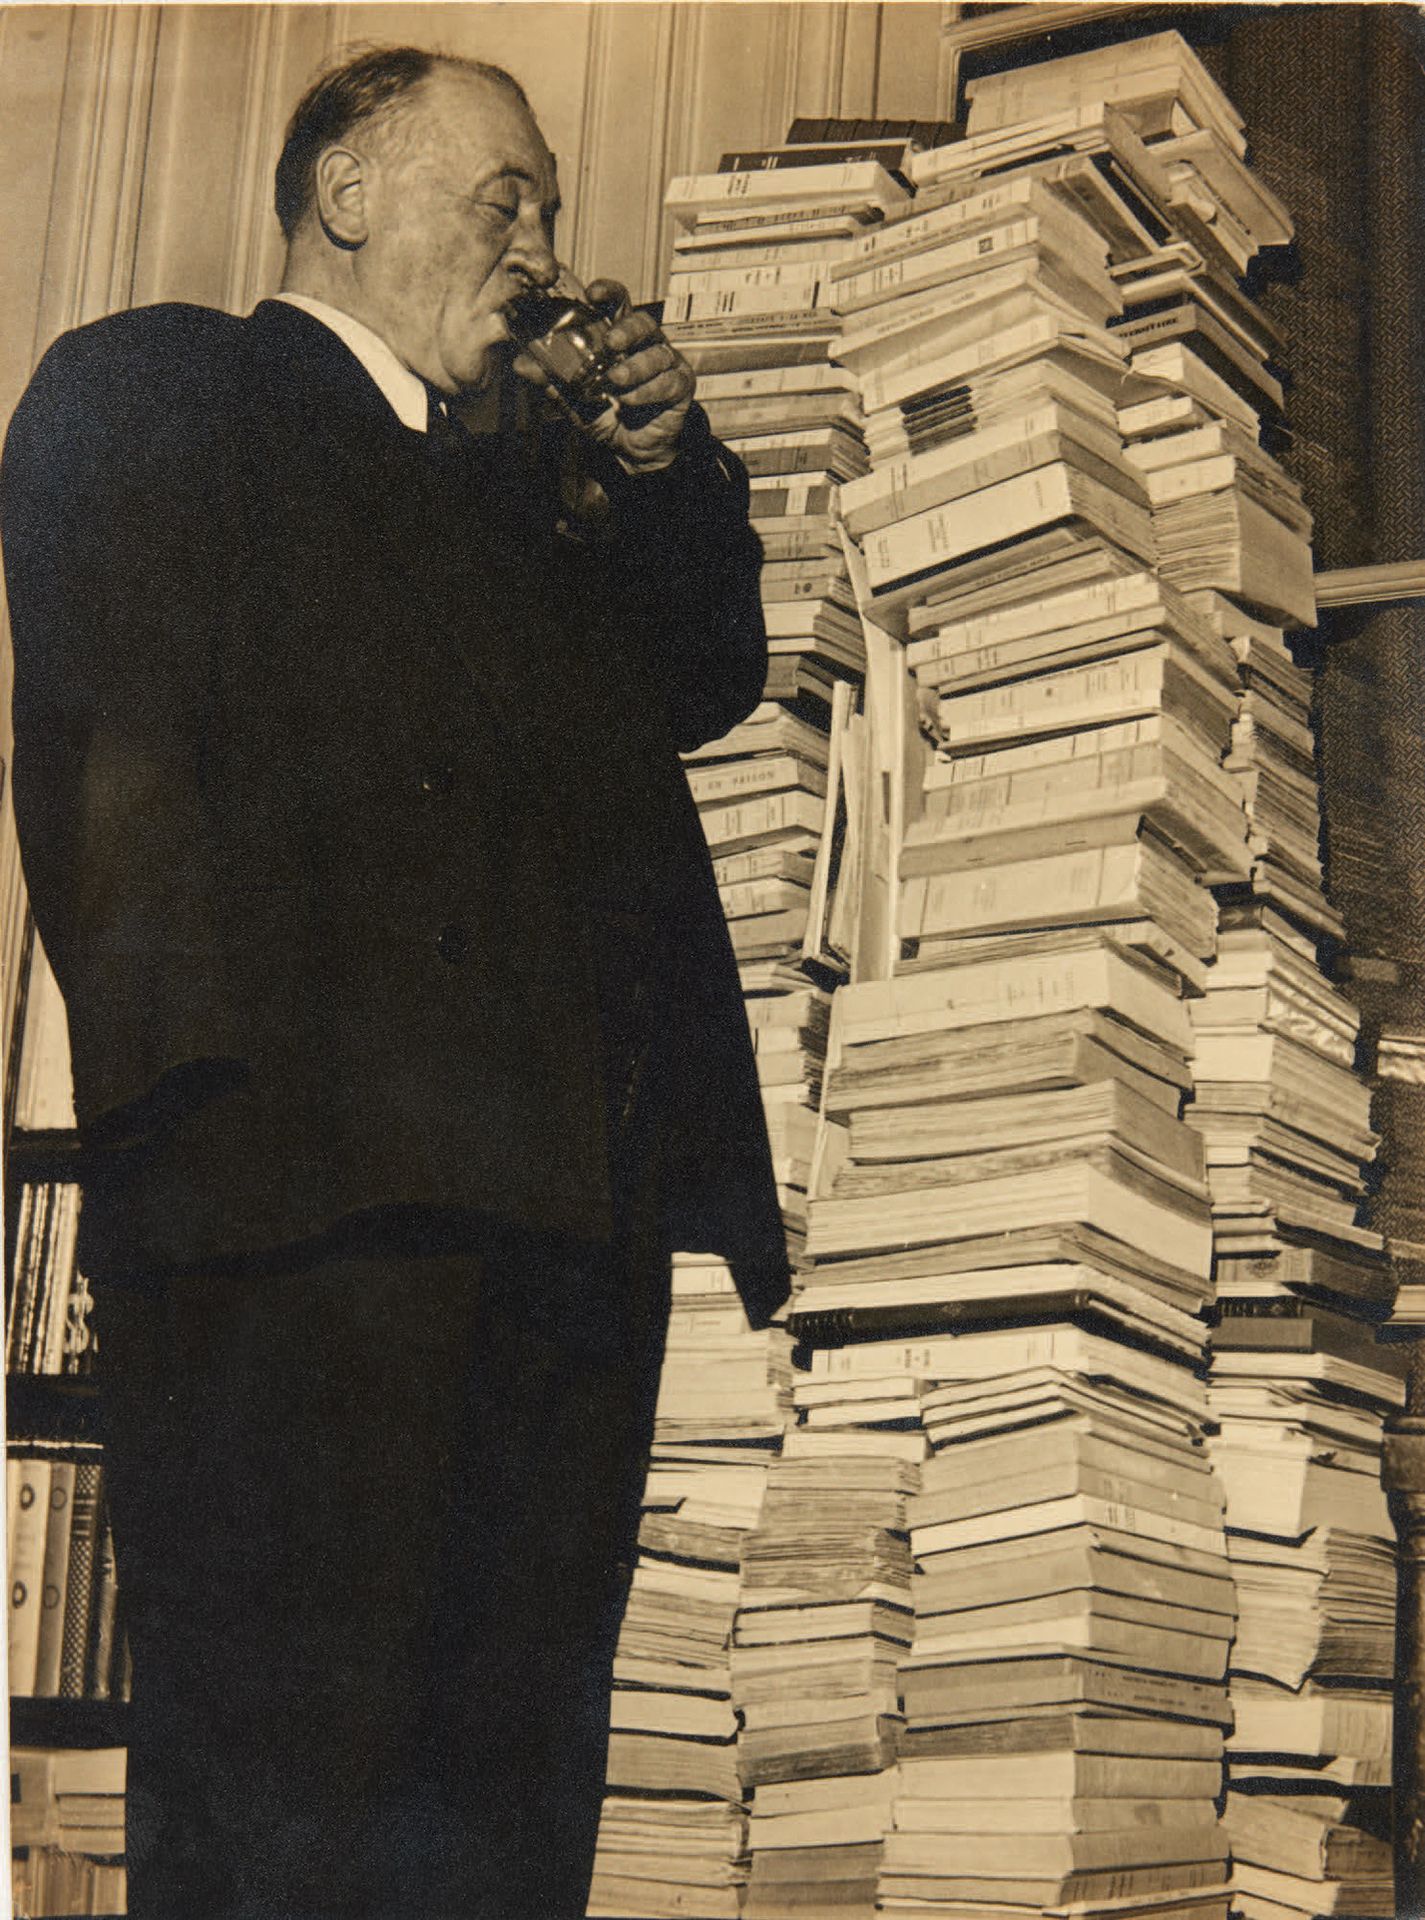 Robert Doisneau. 布莱斯-坎德拉尔的画像。无地点或日期[约1950年]。
银质印刷品（23.9 x 17.9厘米），背面有印章。
布莱斯-坎德拉&hellip;